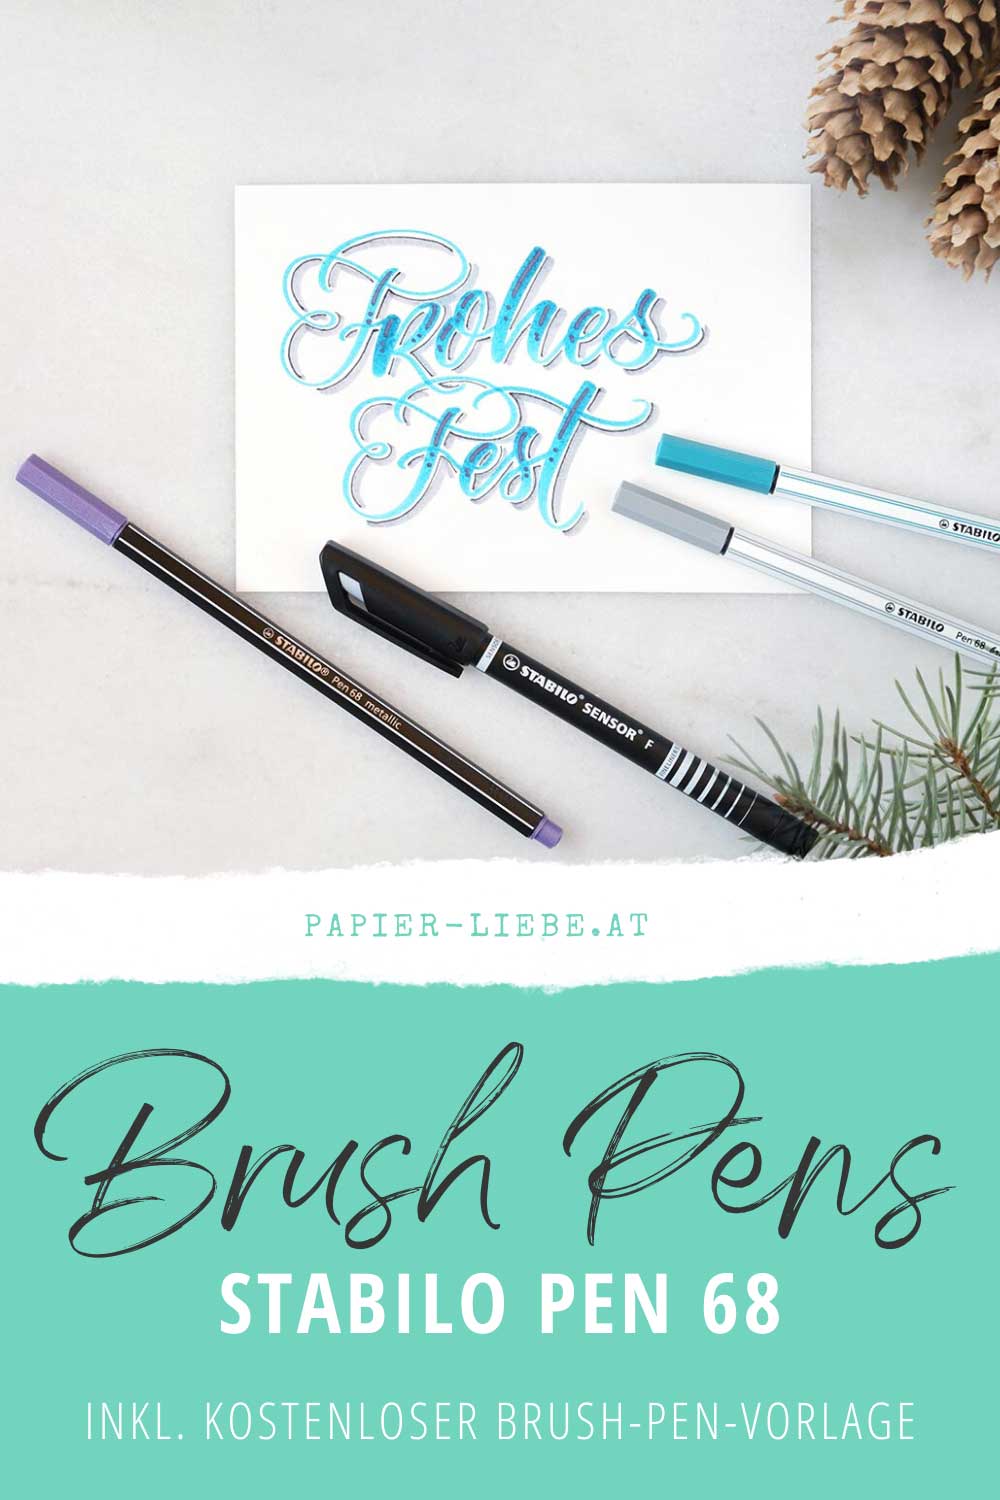 Frohes Fest Stabilo Pen 68 brush